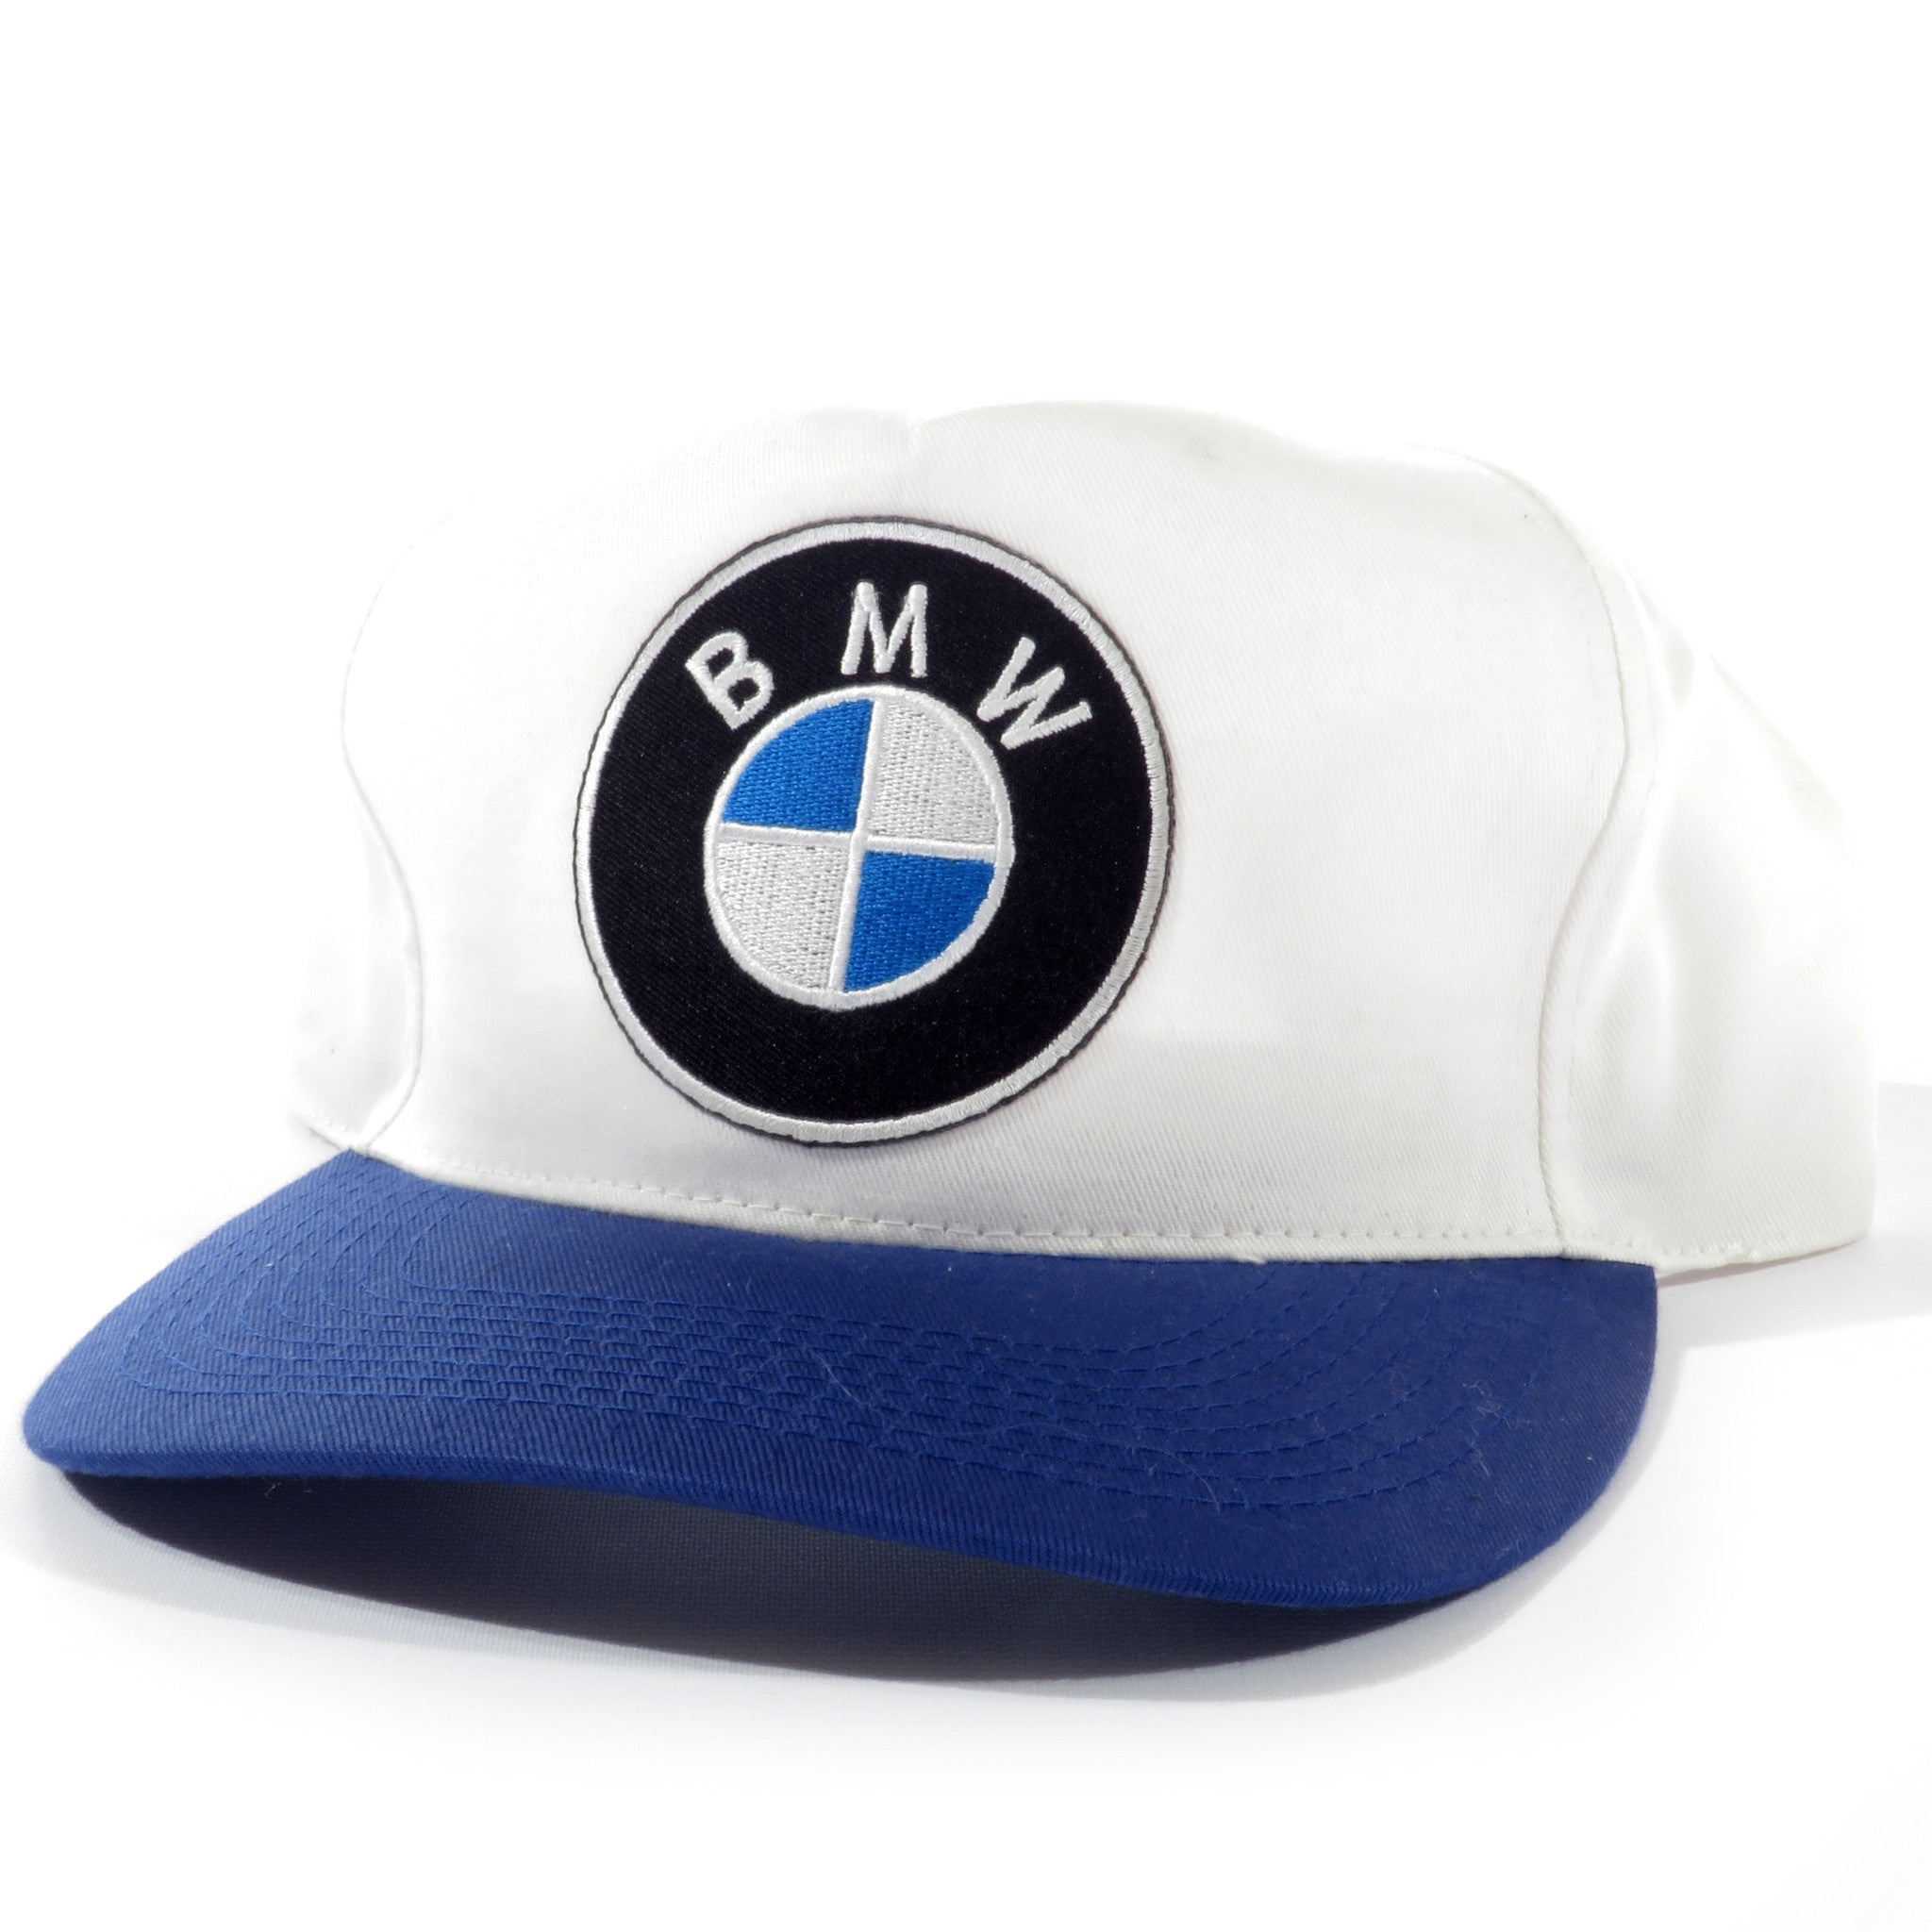 BMW Vintage Snapback Hat